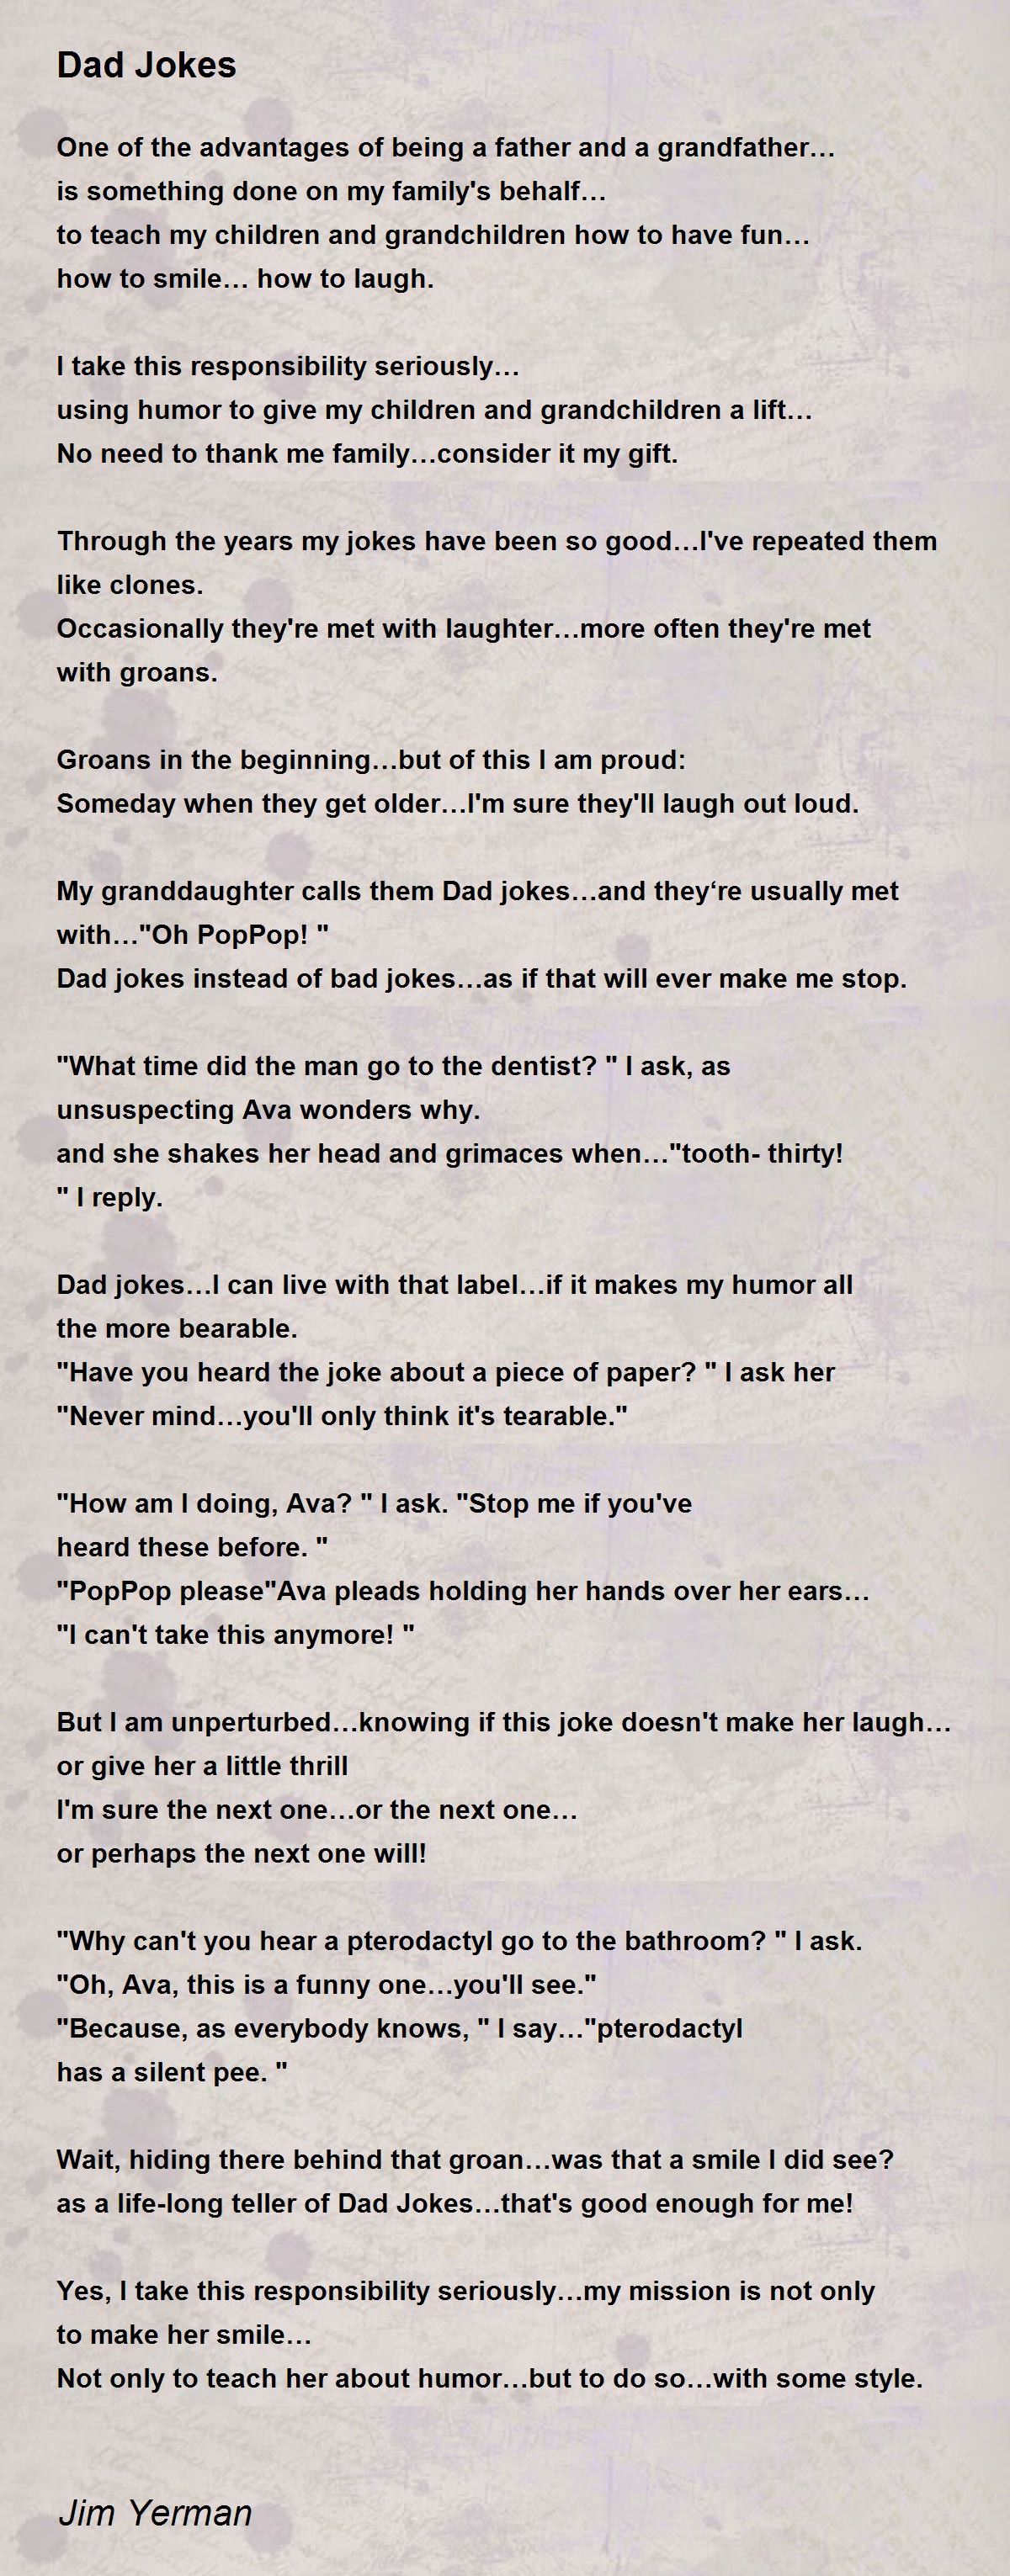 Dad Jokes - Dad Jokes Poem by Jim Yerman